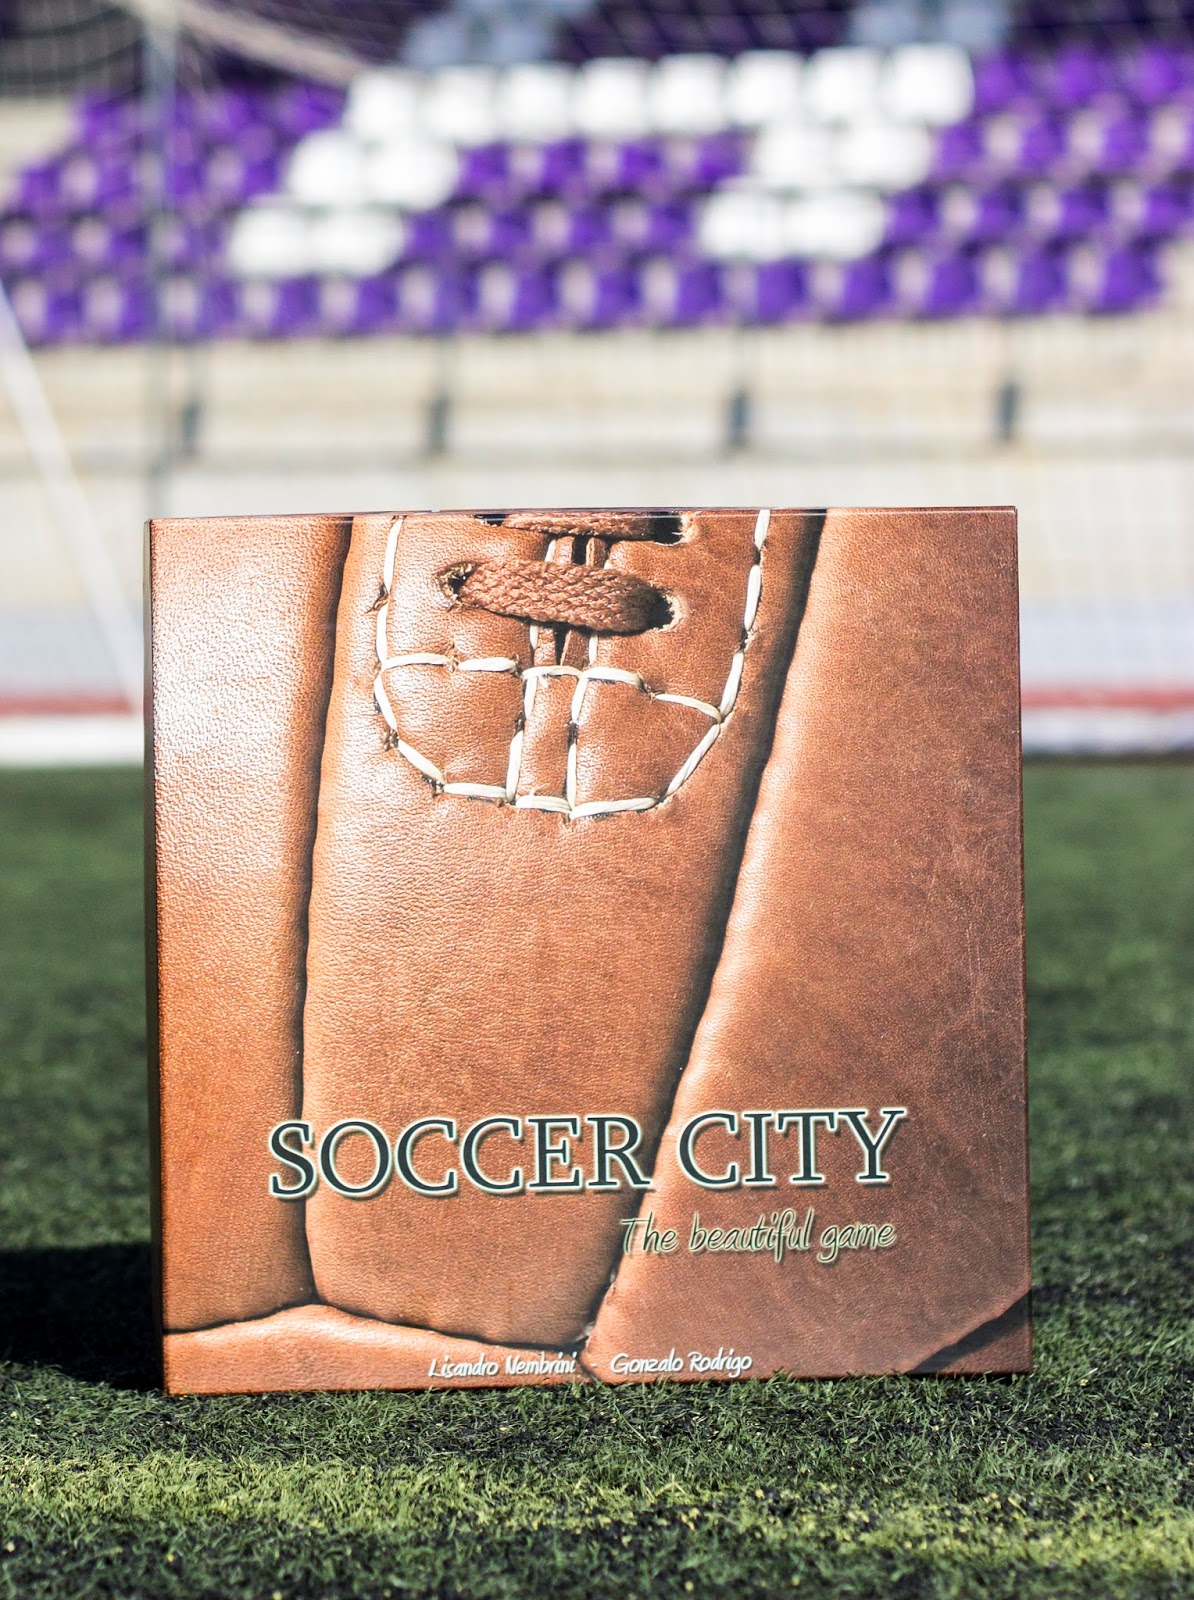 Las cartas de Soccer City — Soccer City. The beautiful game